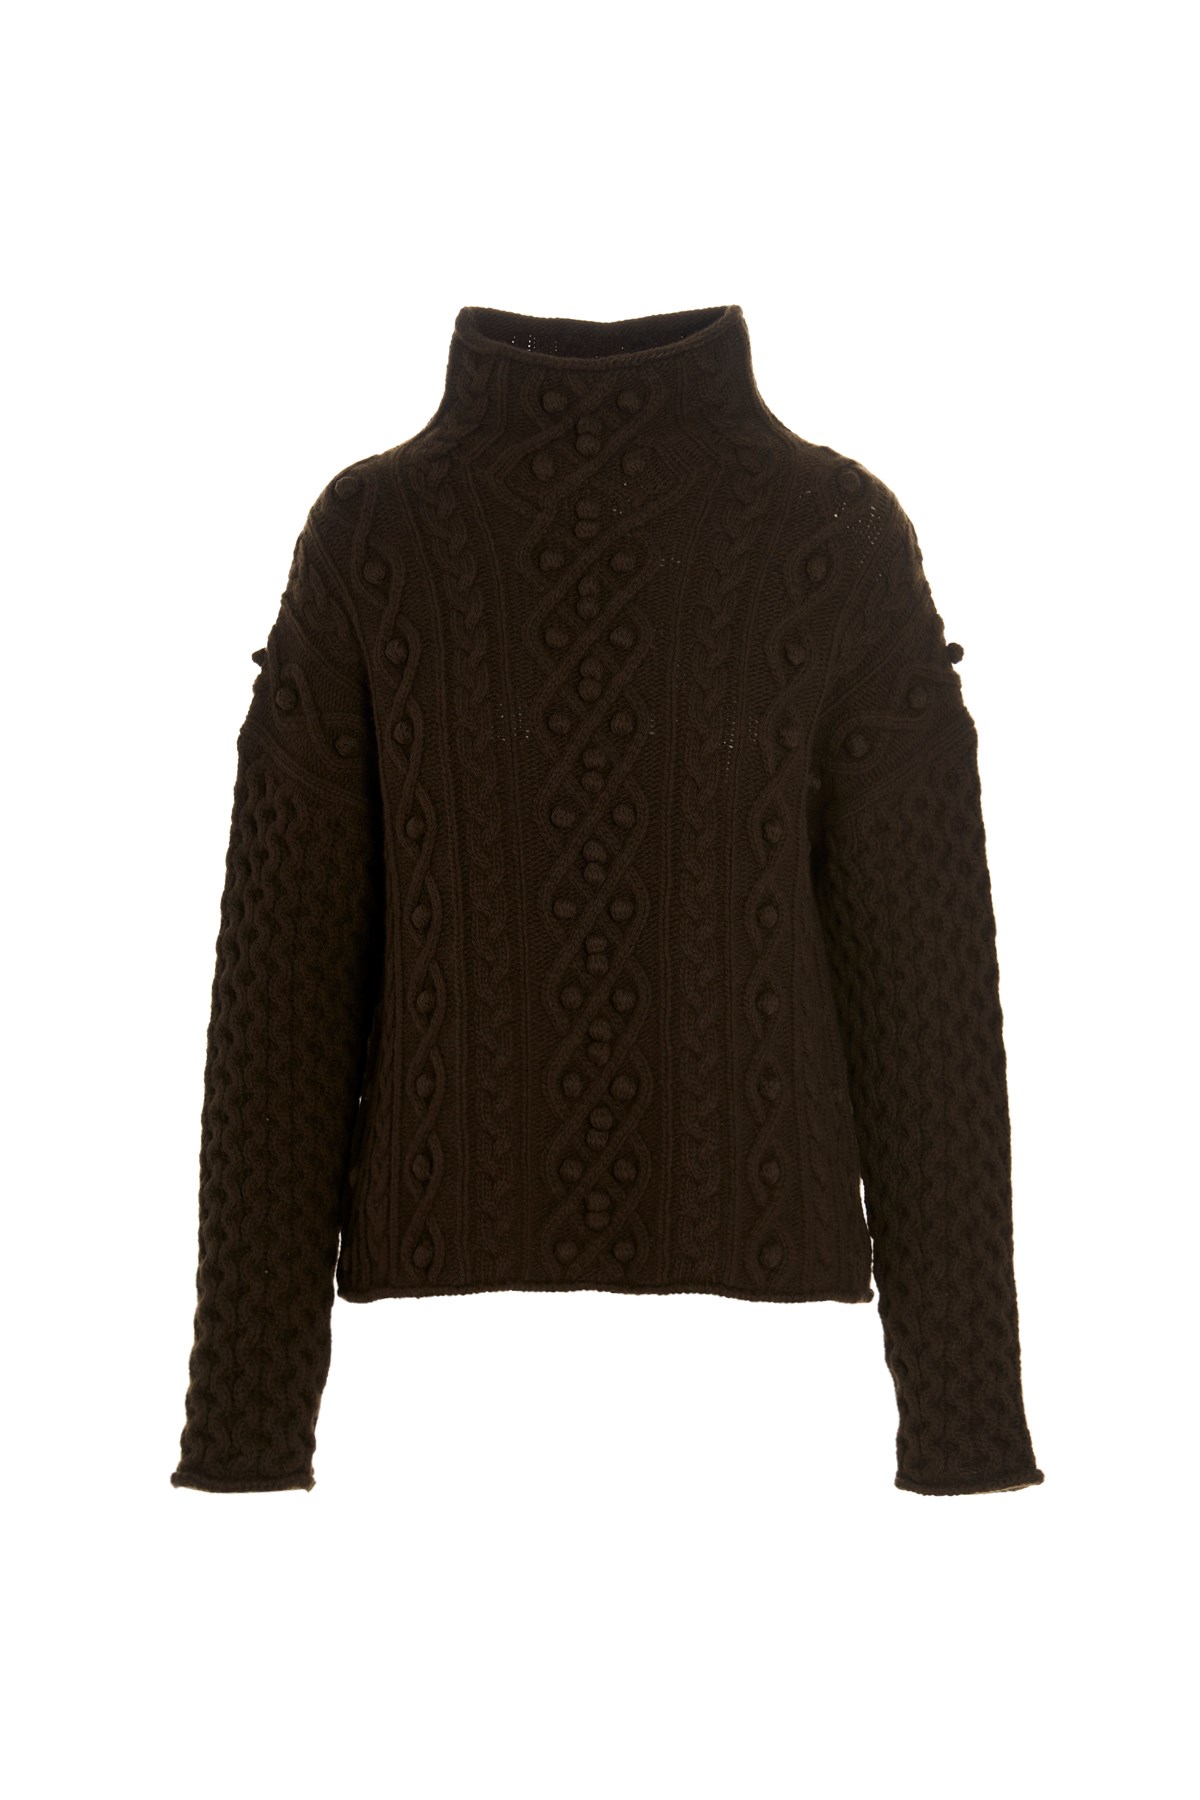 THEORY Braided Wool Sweater